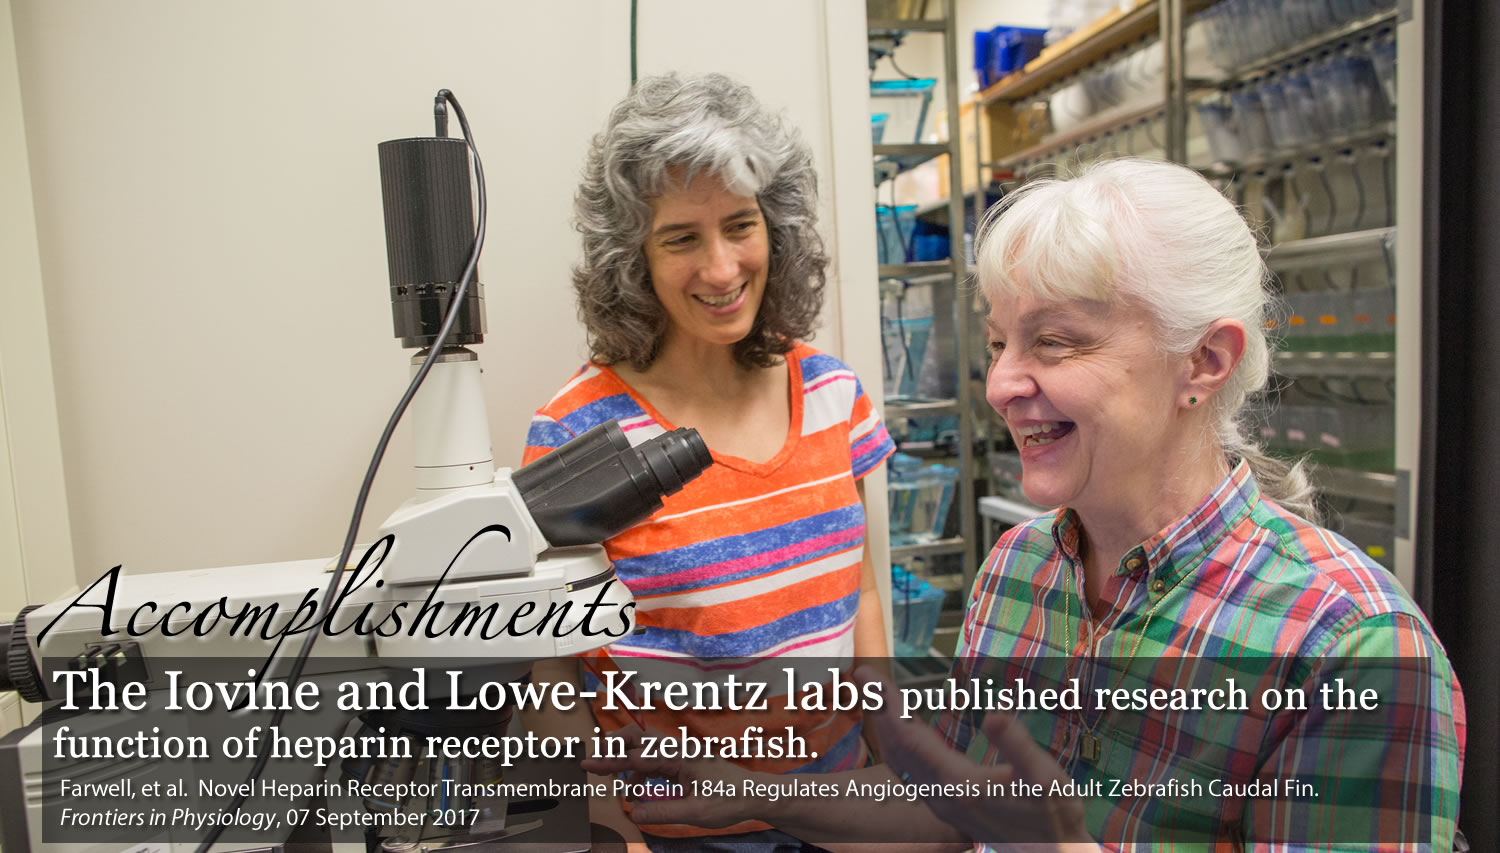 M. Kathryn Iovine, Ph.D. and Linda Lowe-Krentz, Ph.D.